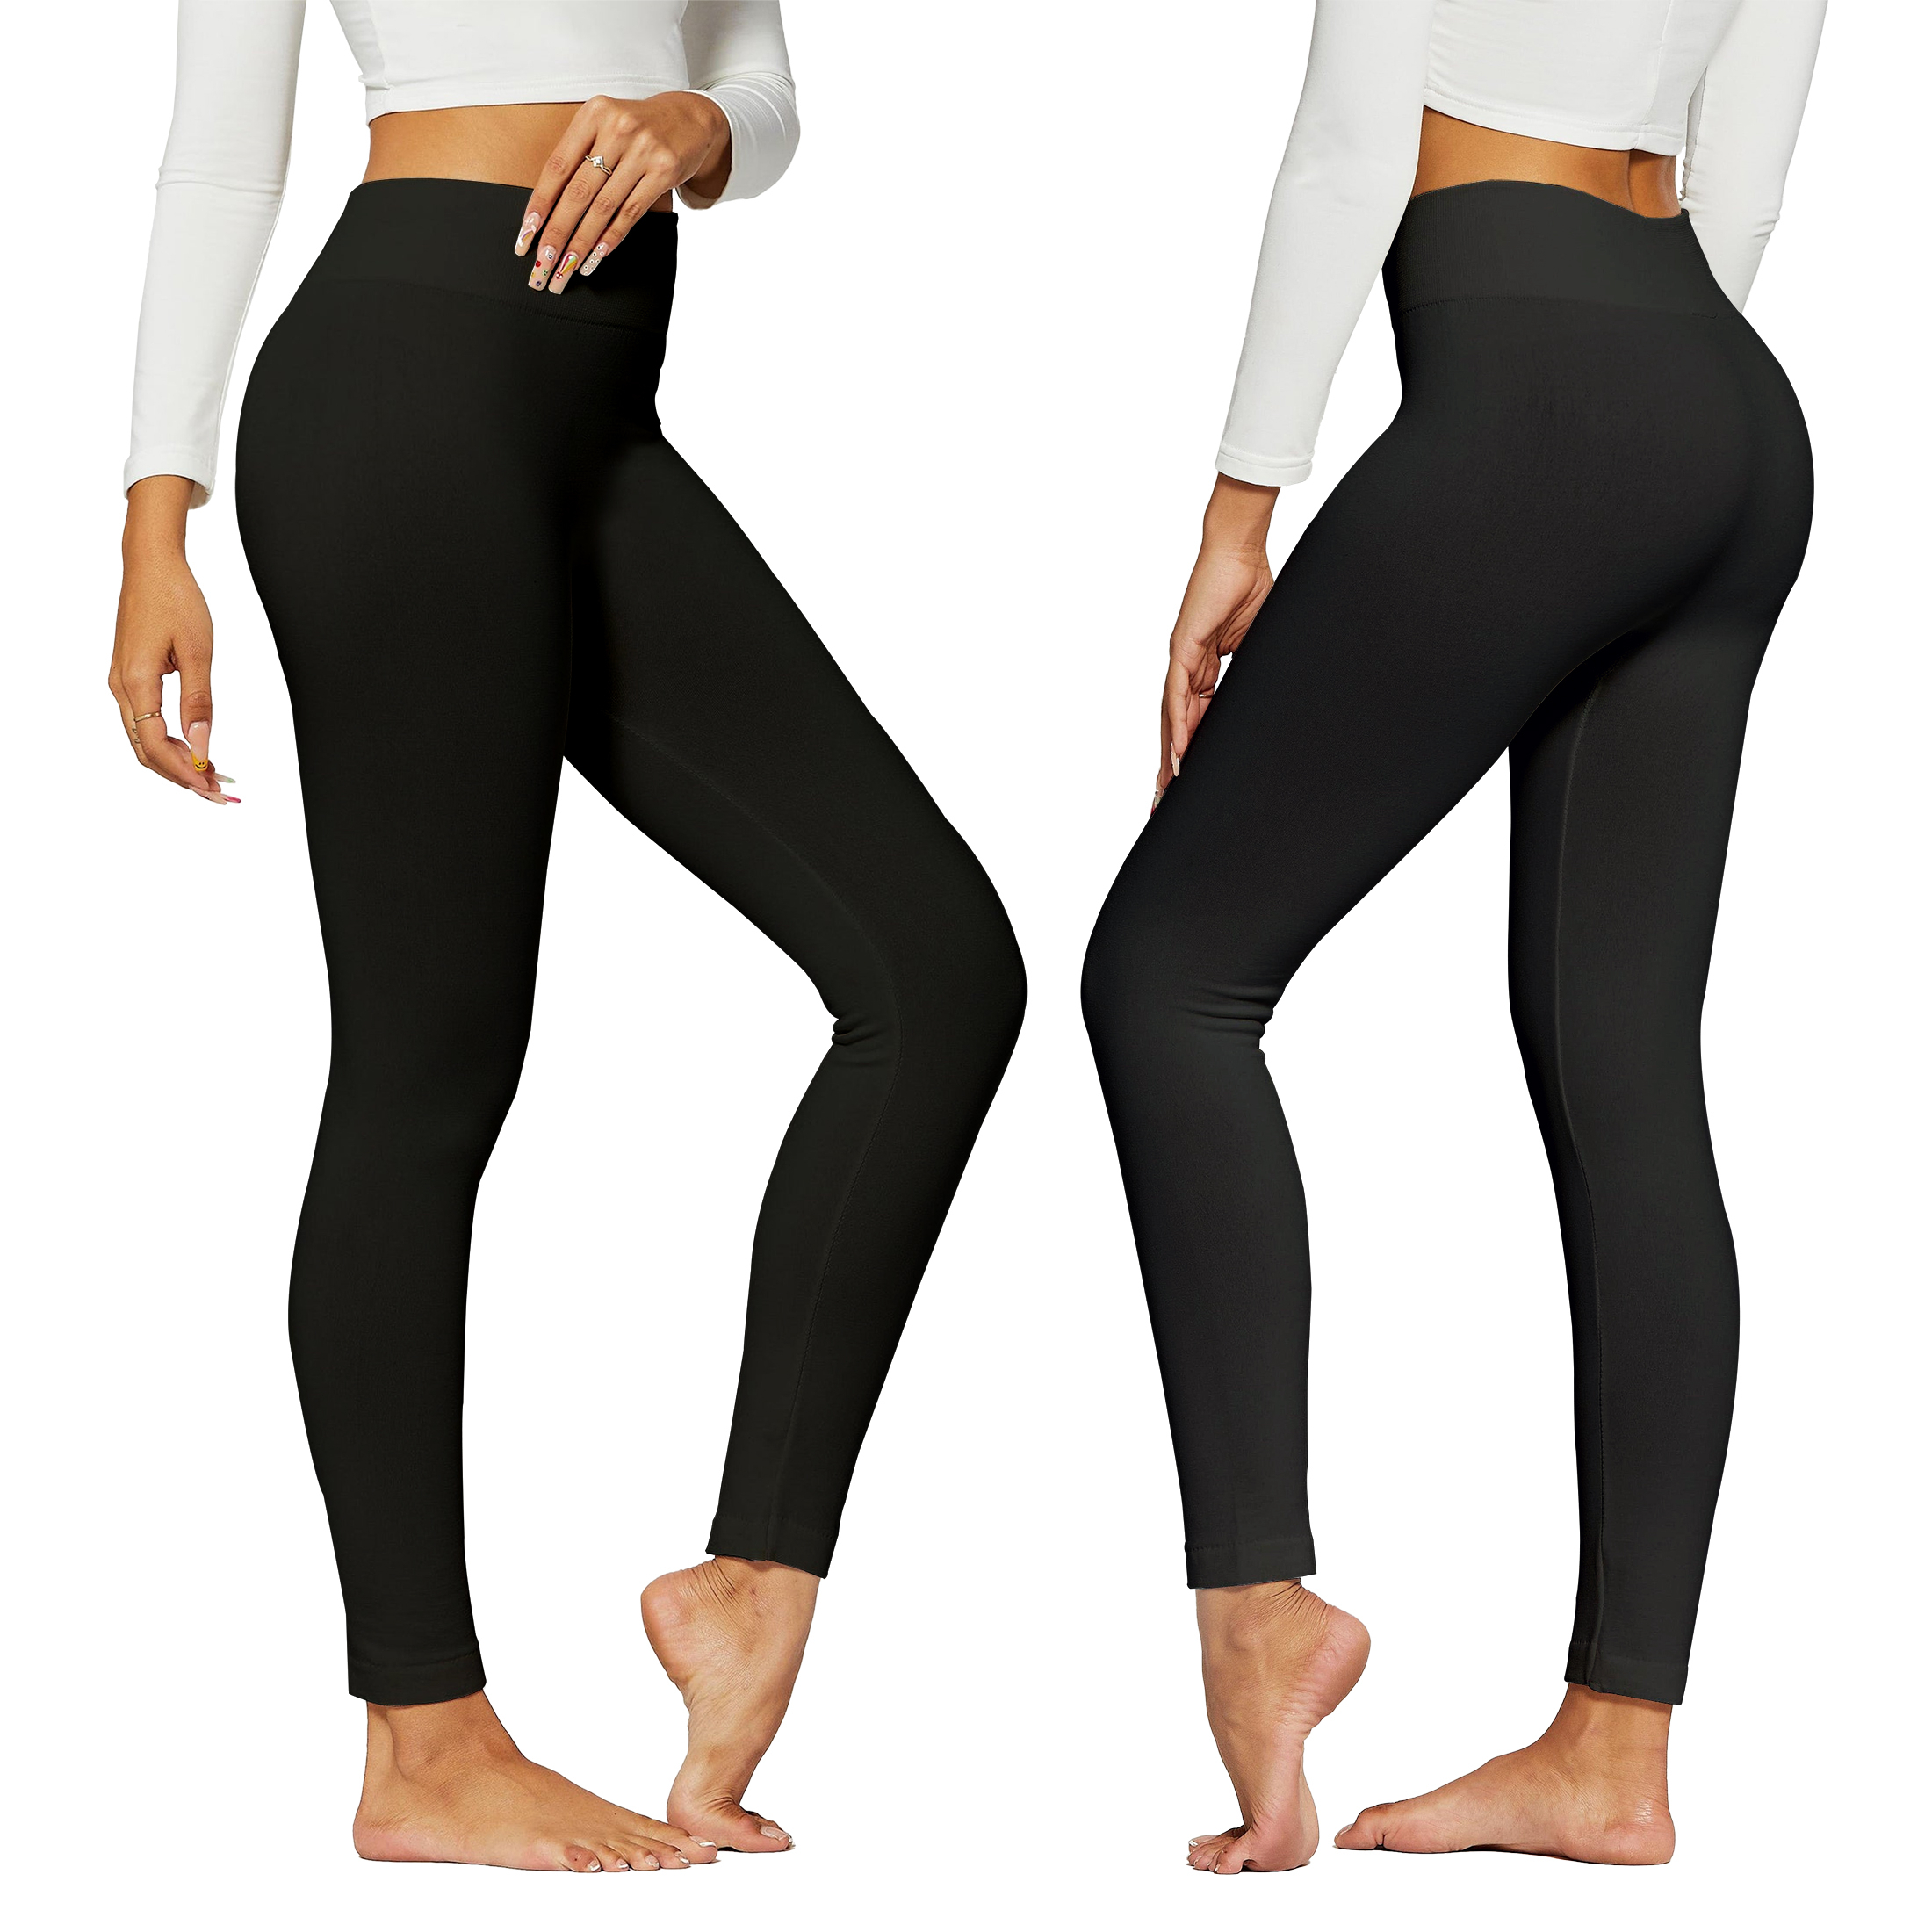 4-Pack:Women's Premium Quality High-Waist Fleece-Lined Leggings (Plus Size Available) - Black, 3X/4X